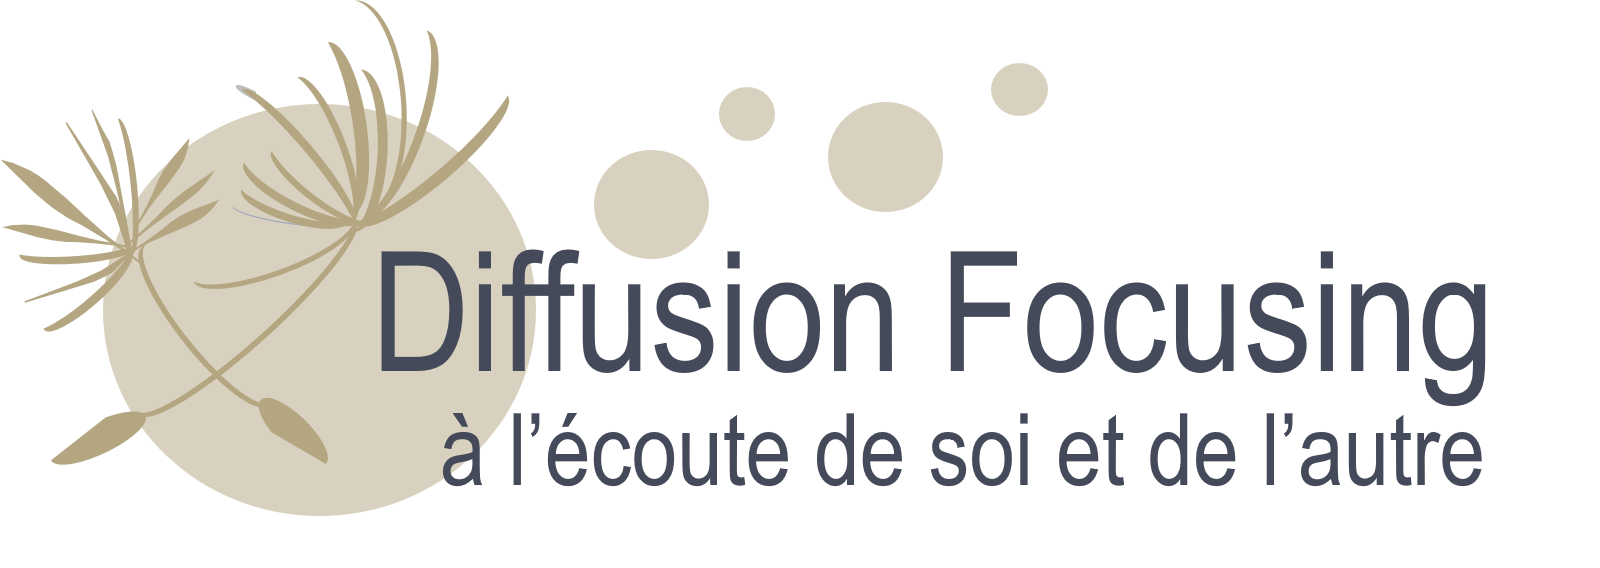 Diffusion Focusing Québec